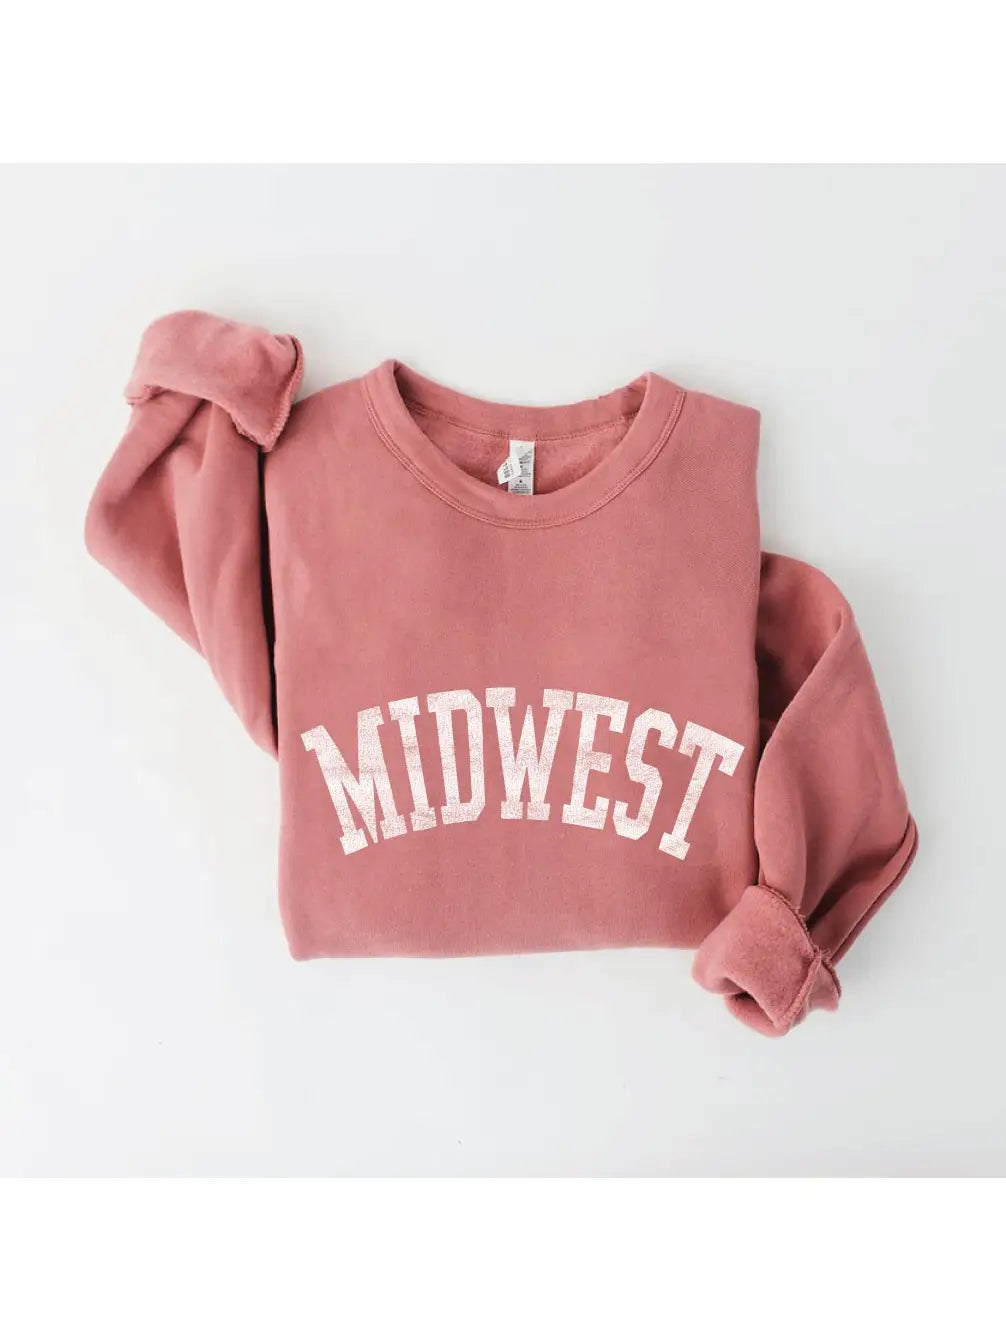 MIDWEST  Graphic Sweatshirt - Mauve